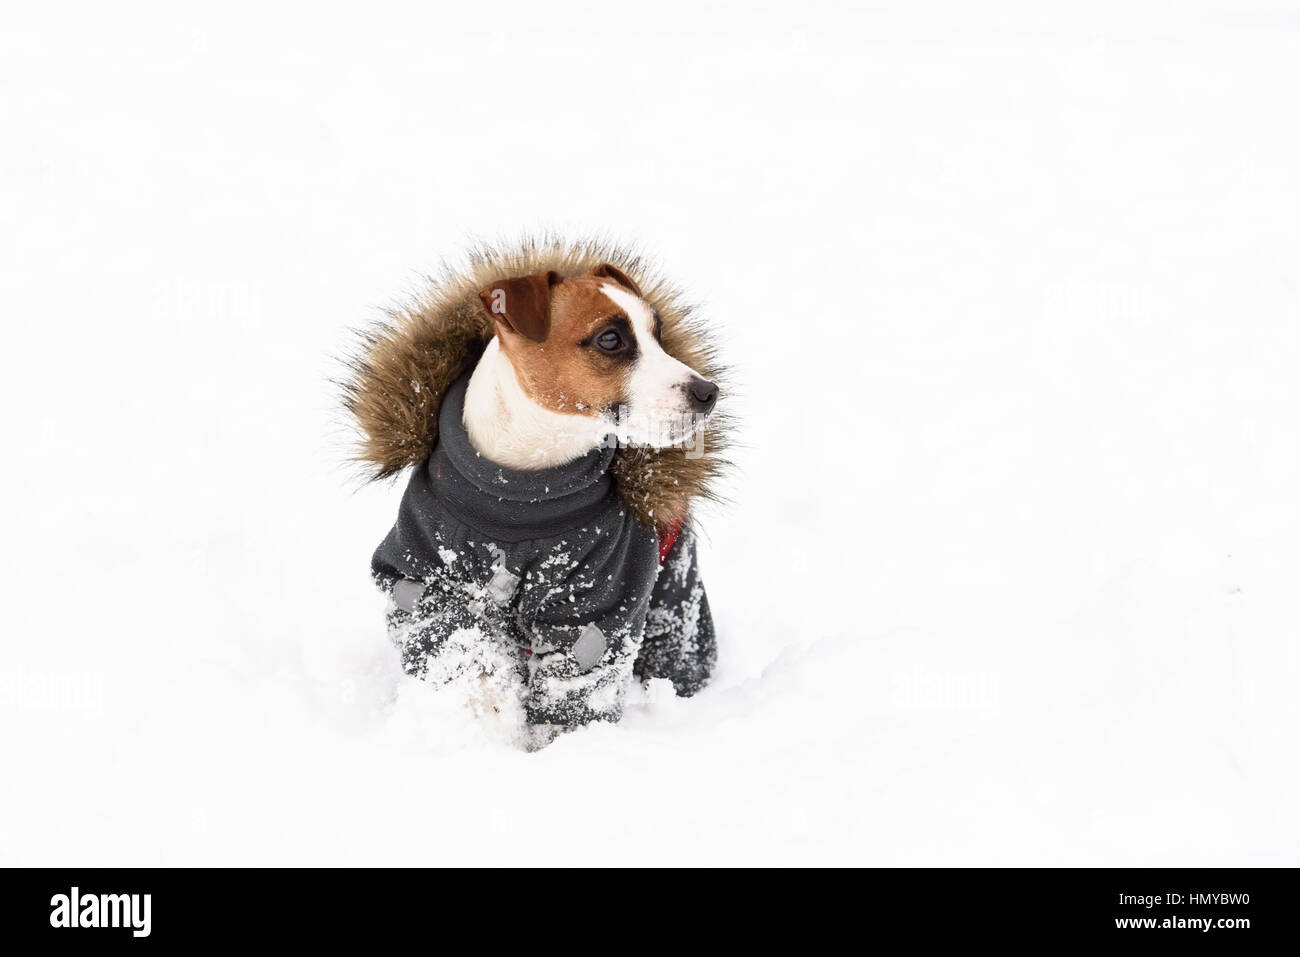 Winter doggy fashion: dog wearing apparel with fur collar Stock Photo